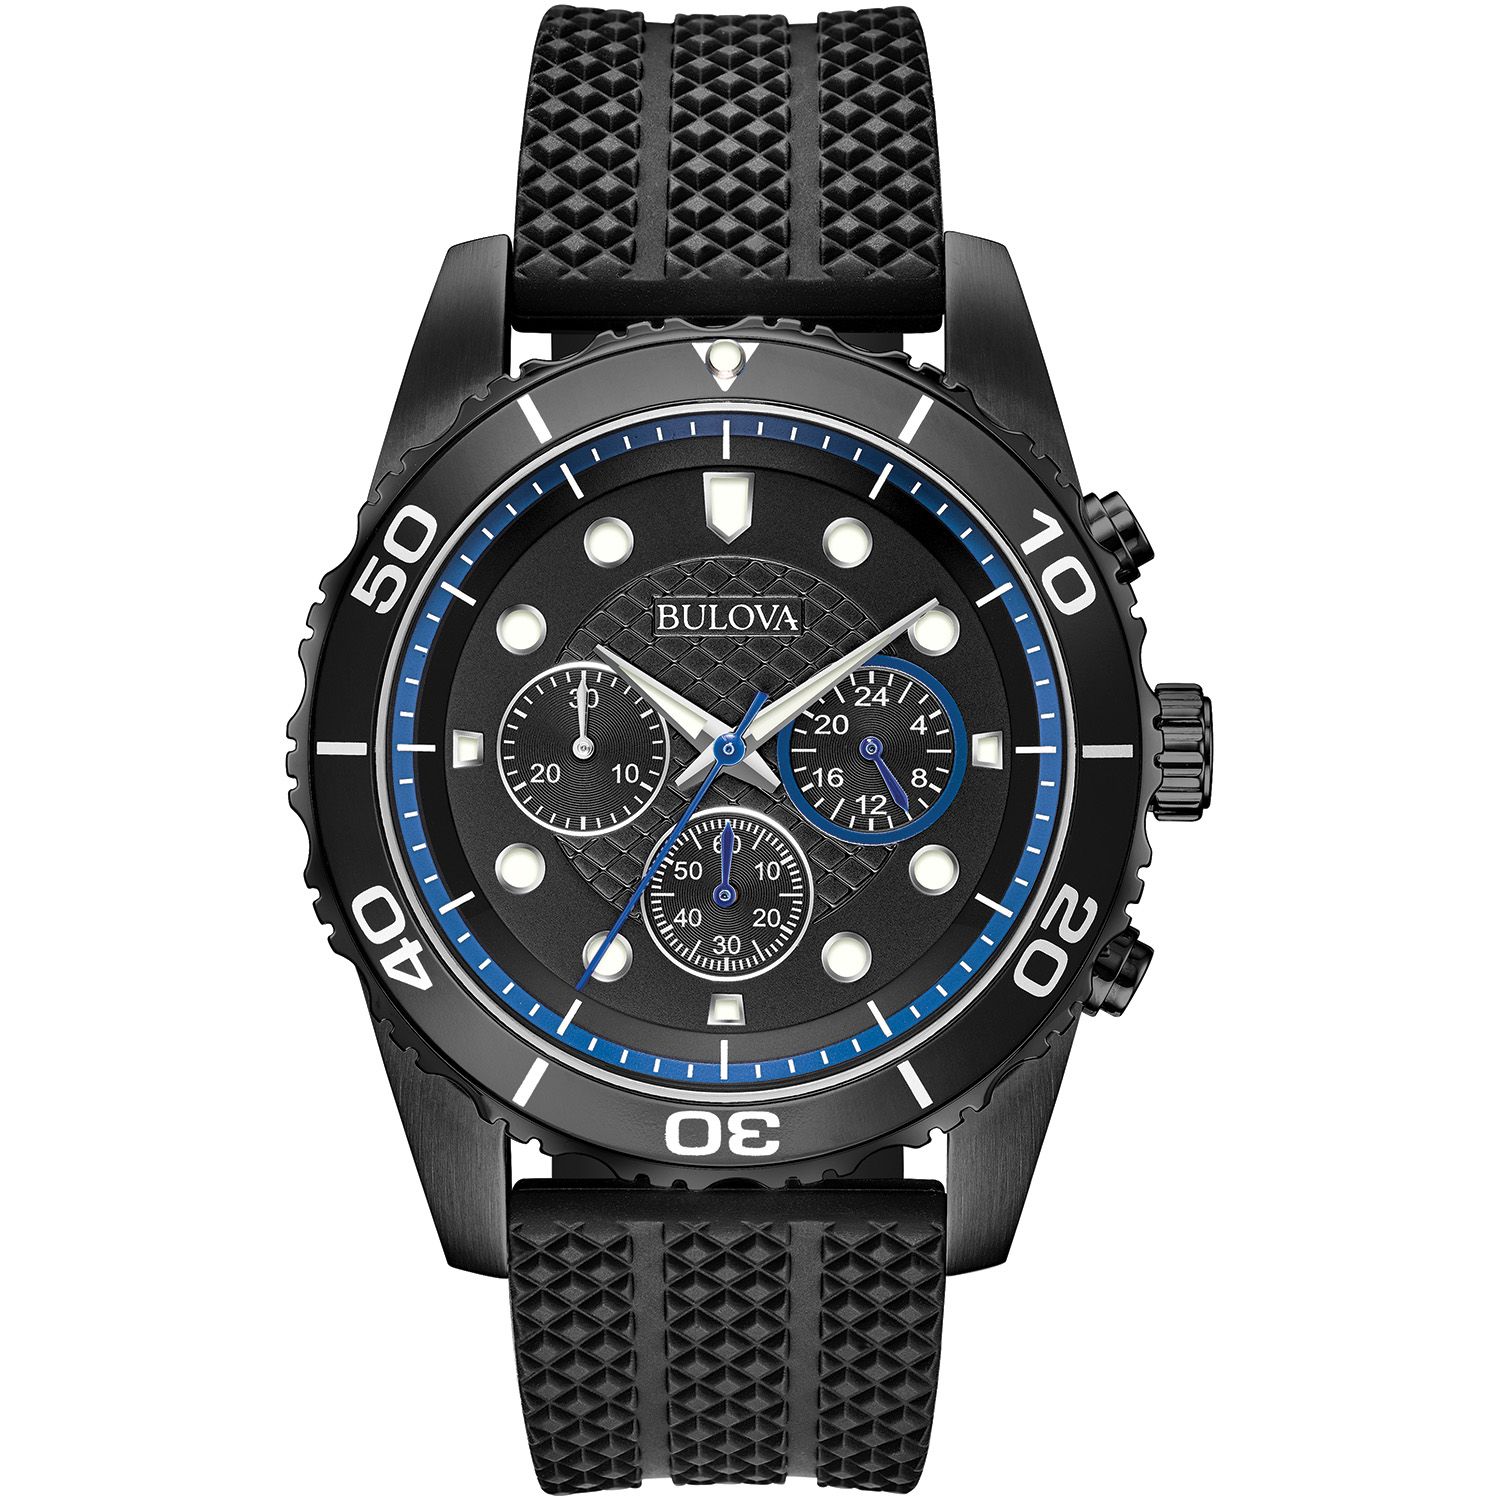 Bulova Men's Chronograph Sport Black Silicone Strap Watch - image 1 of 2